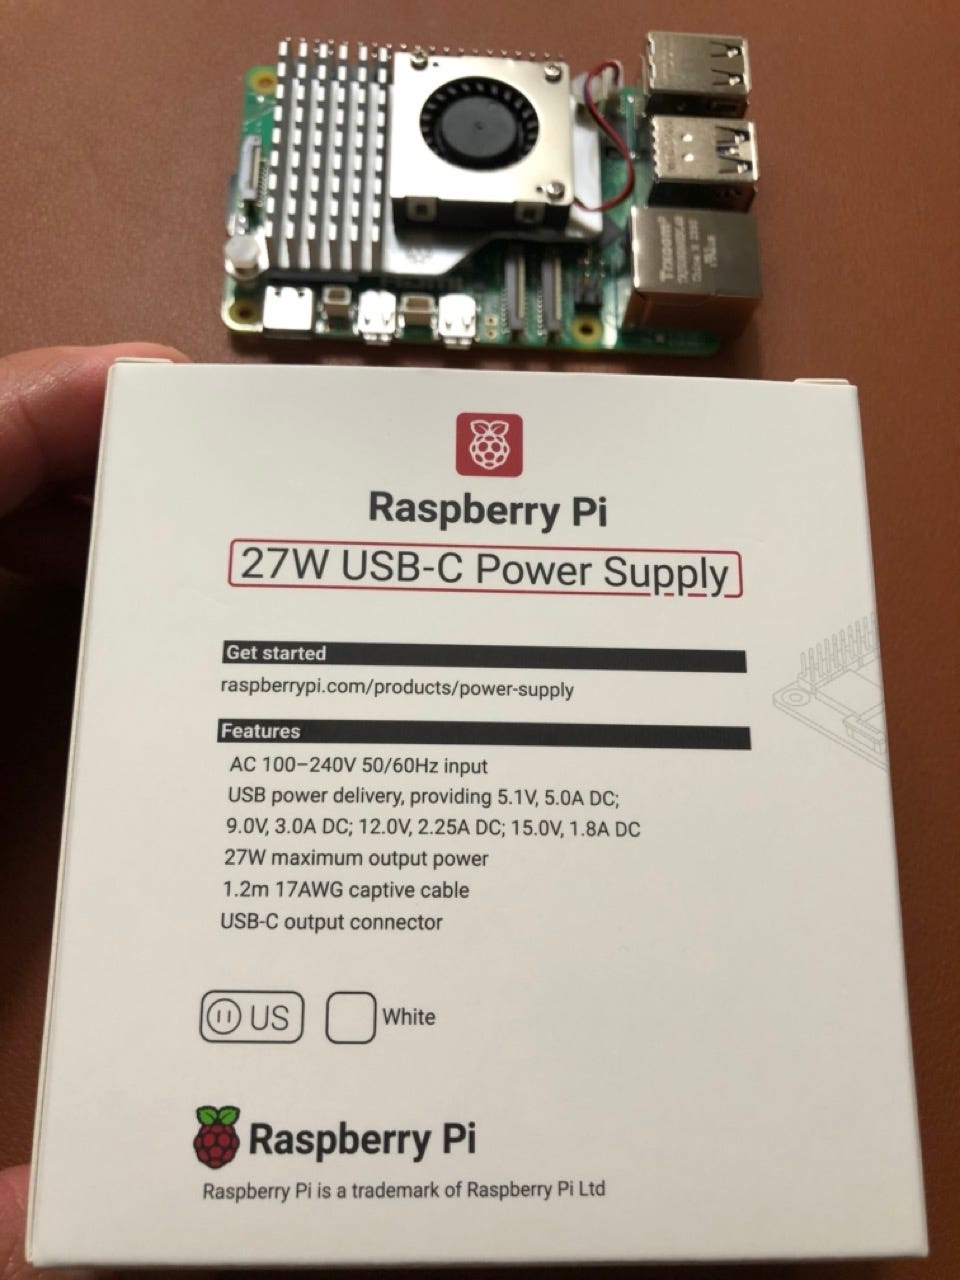 Raspberry Pi 5: Picked up 27W USB-C Power Supply